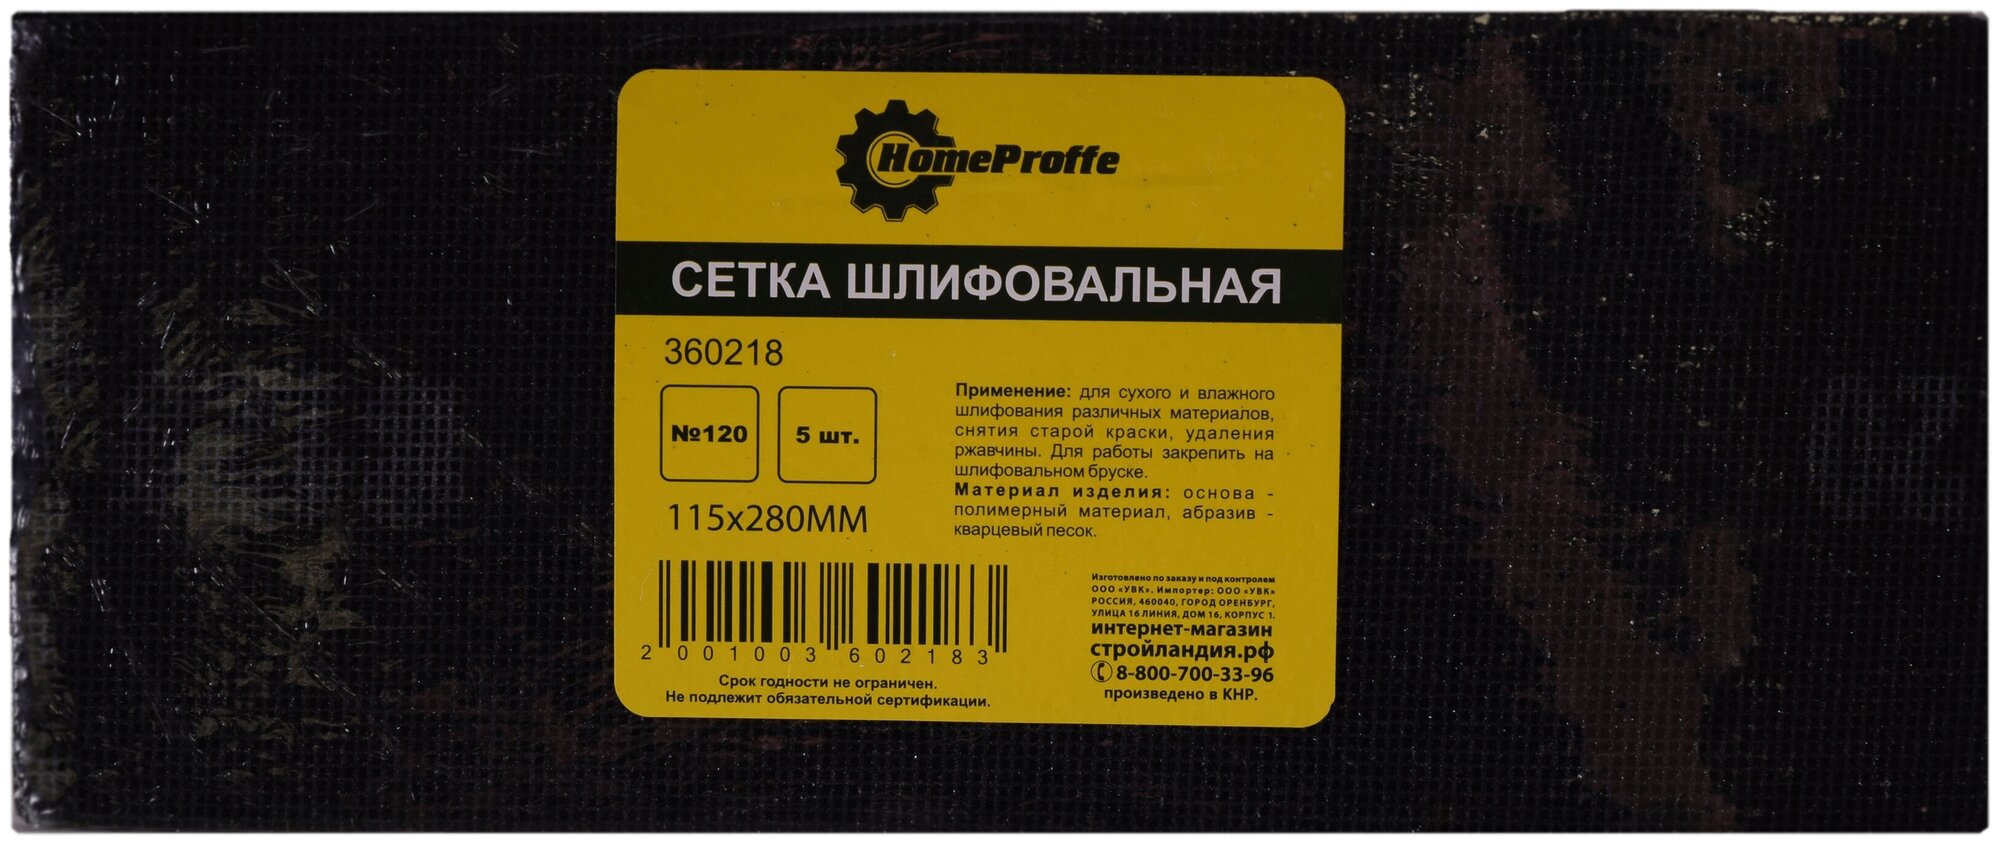 Сетка шлифовальная HOMEPROFFE № 120 115 х280мм 5шт/упаковка